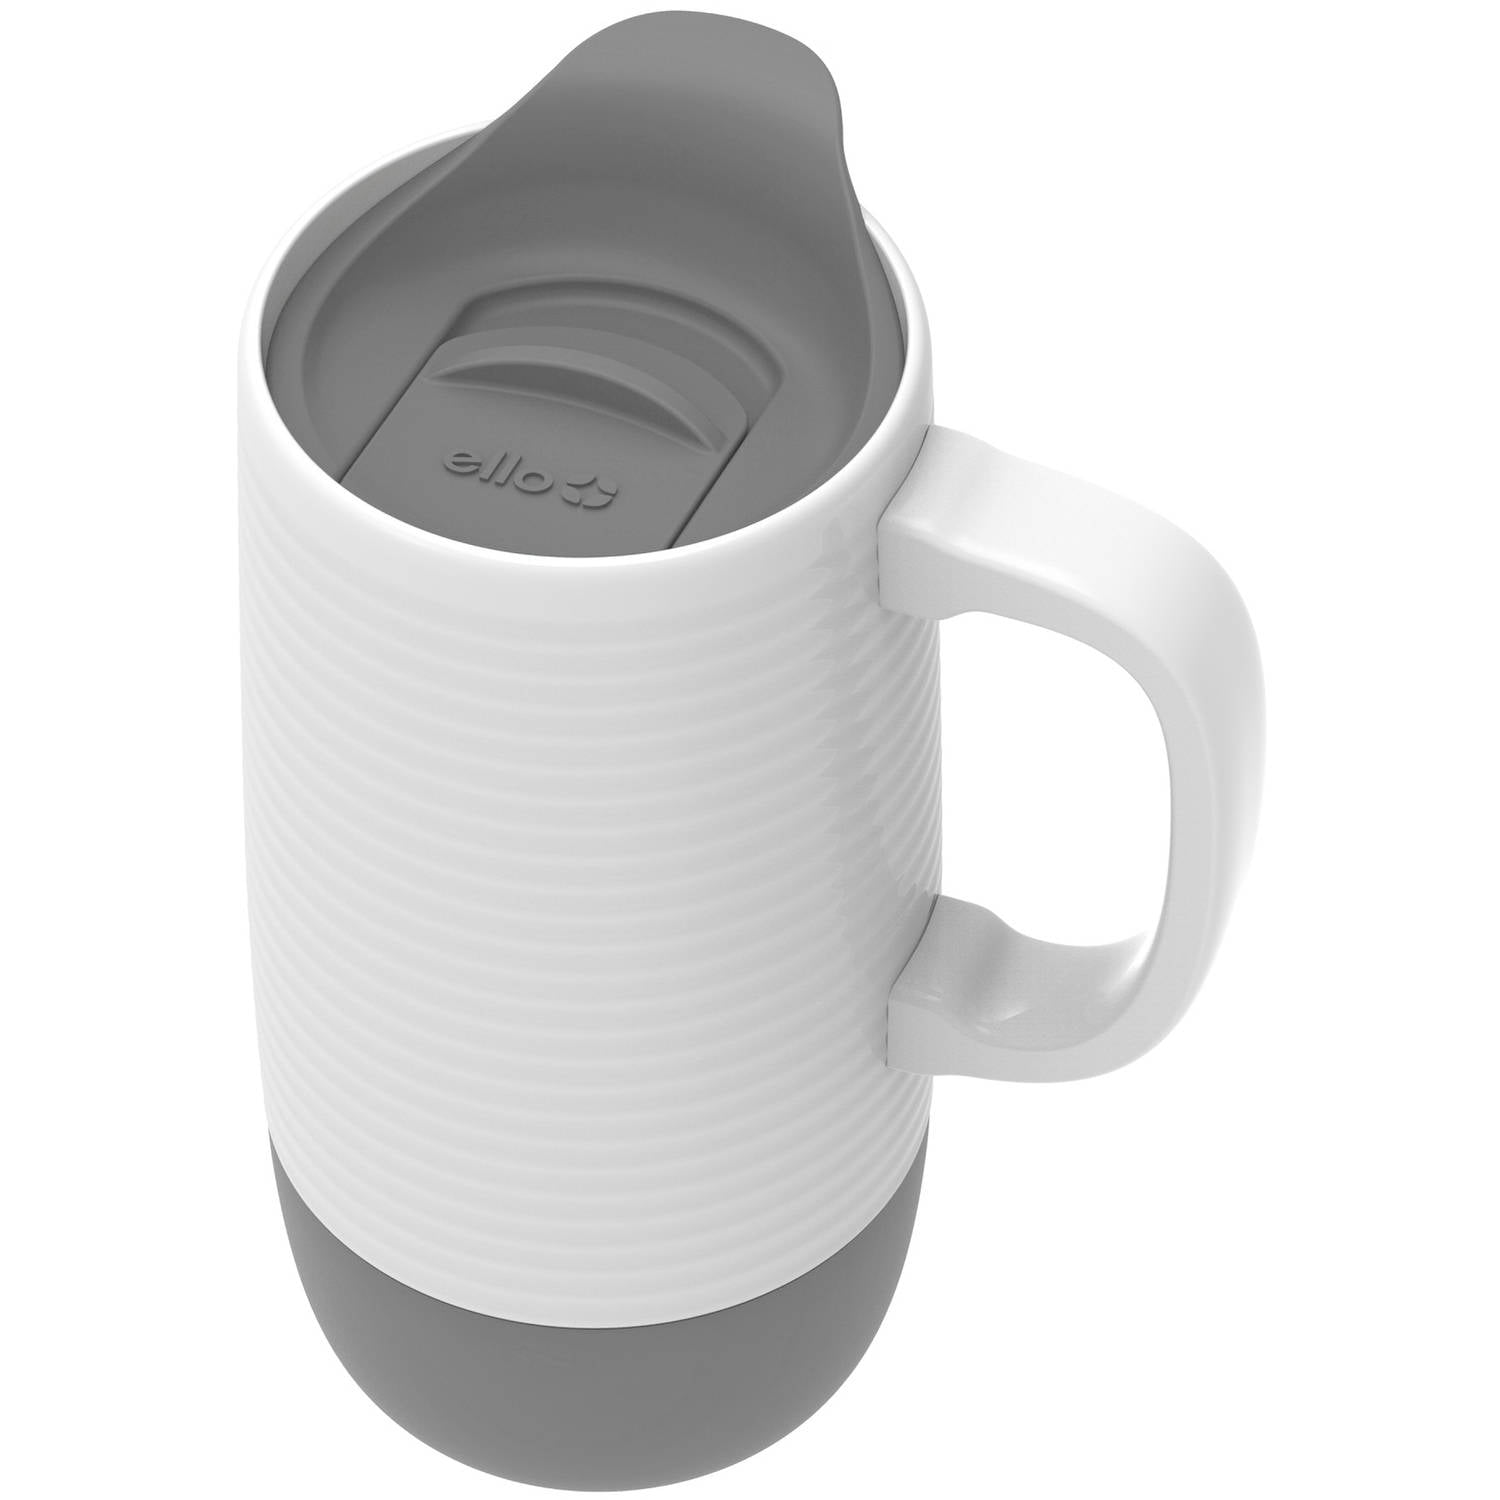 Ello Commute 18oz Ceramic Travel Mug White : Target